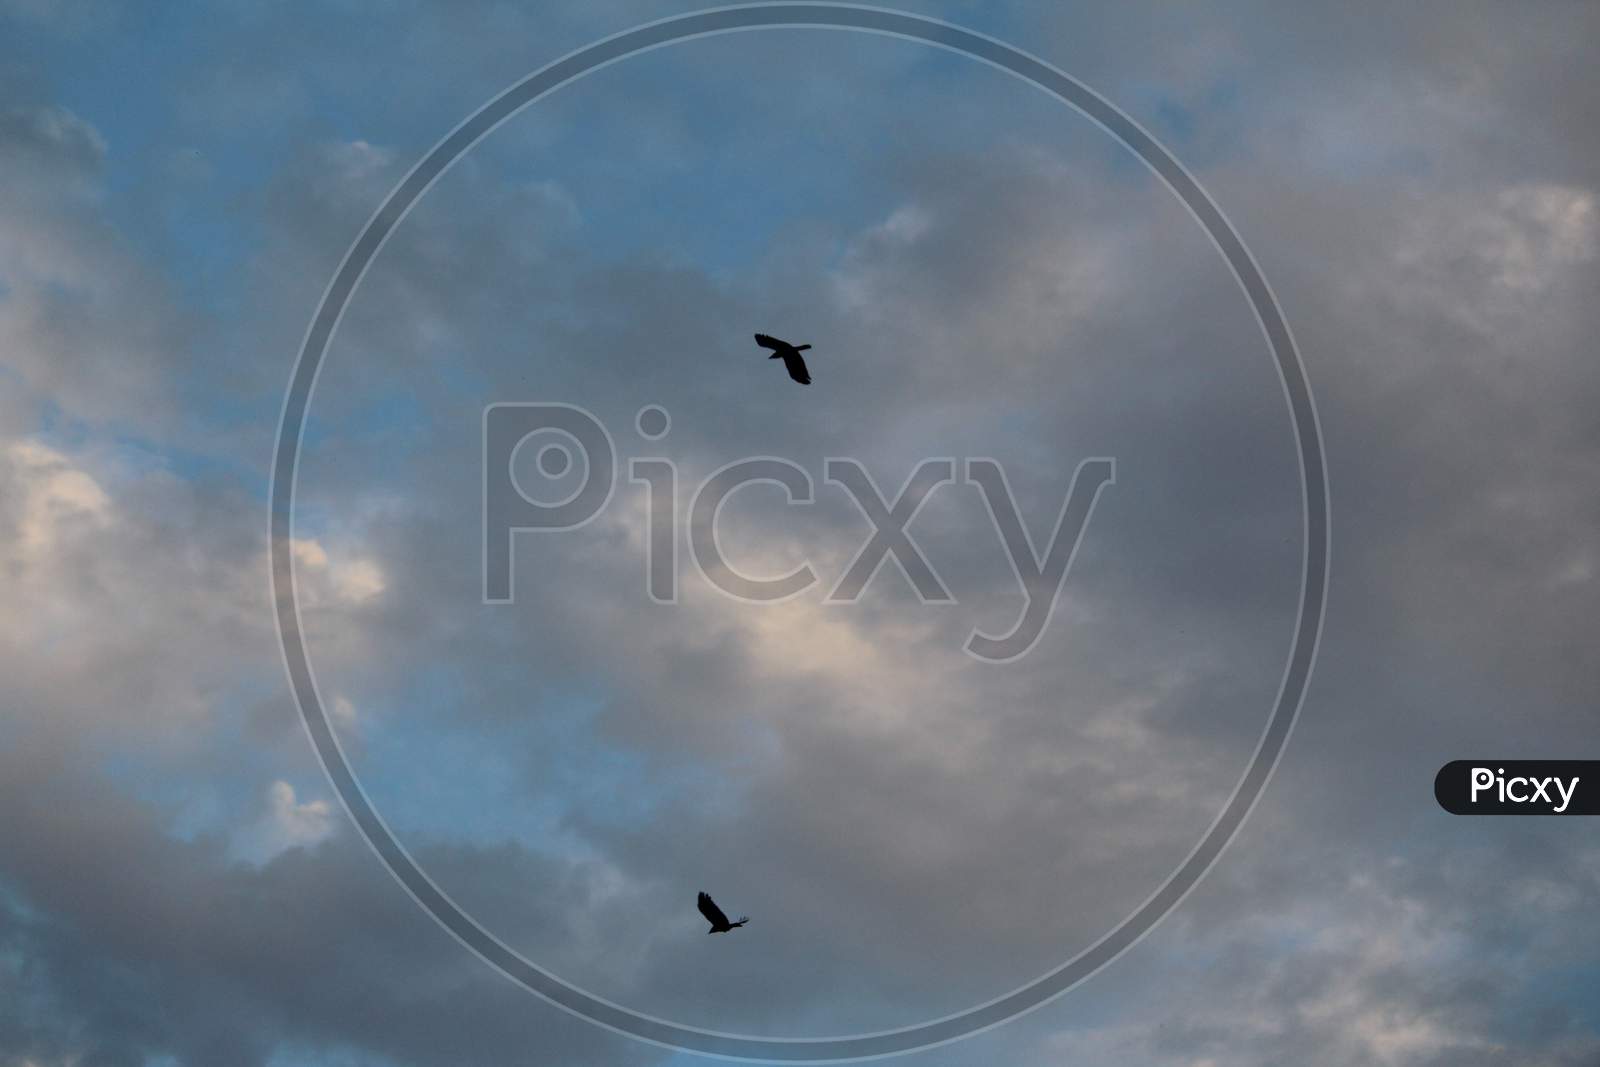 Birds flying in the blue sky